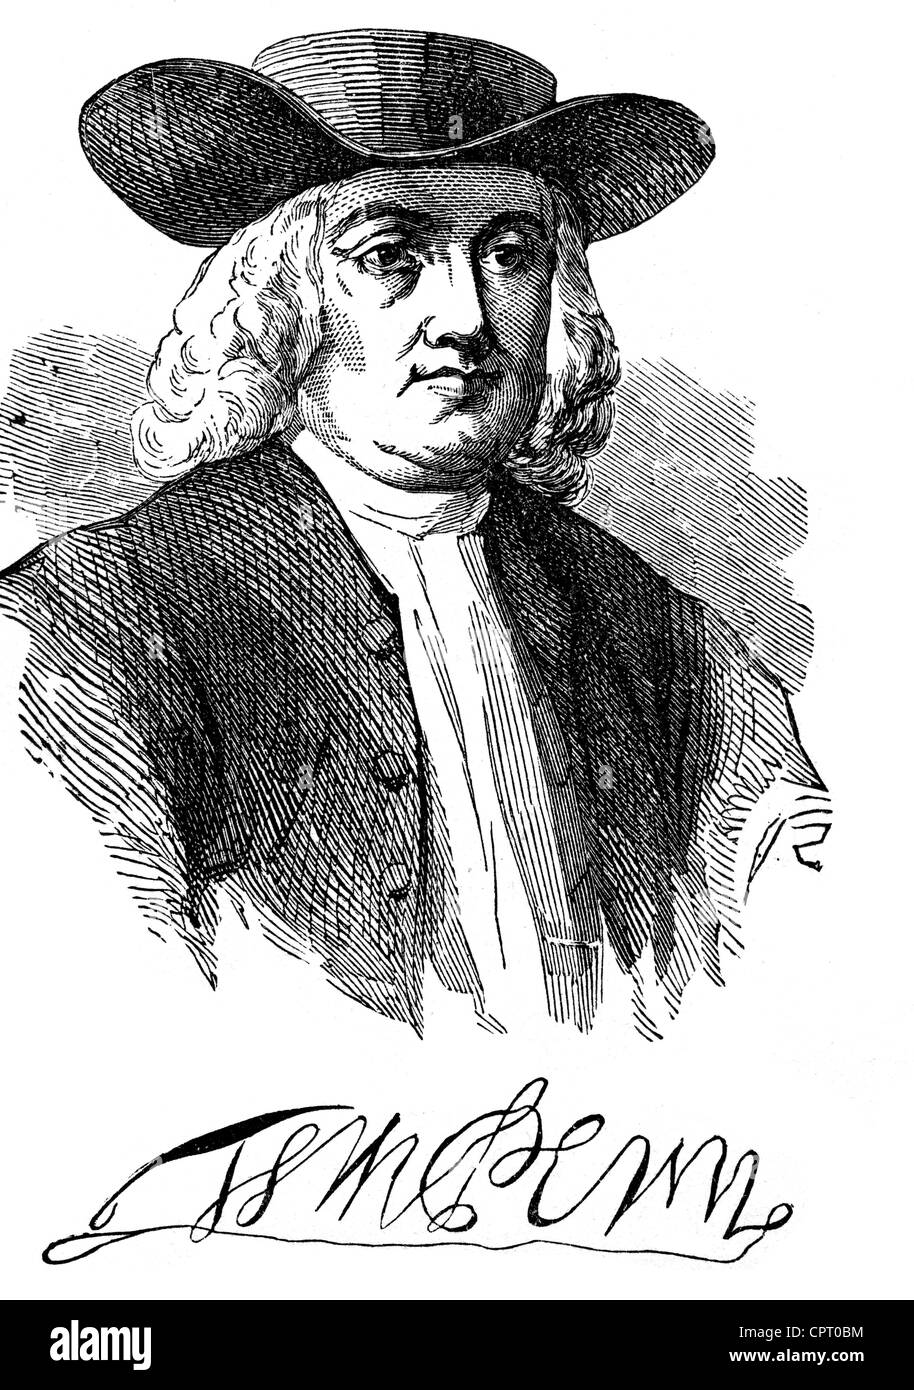 Penn, William, 14.10.1644 - 30.7.1718, English theologian (Quaker), portrait, wood engraving, 19th century, Stock Photo